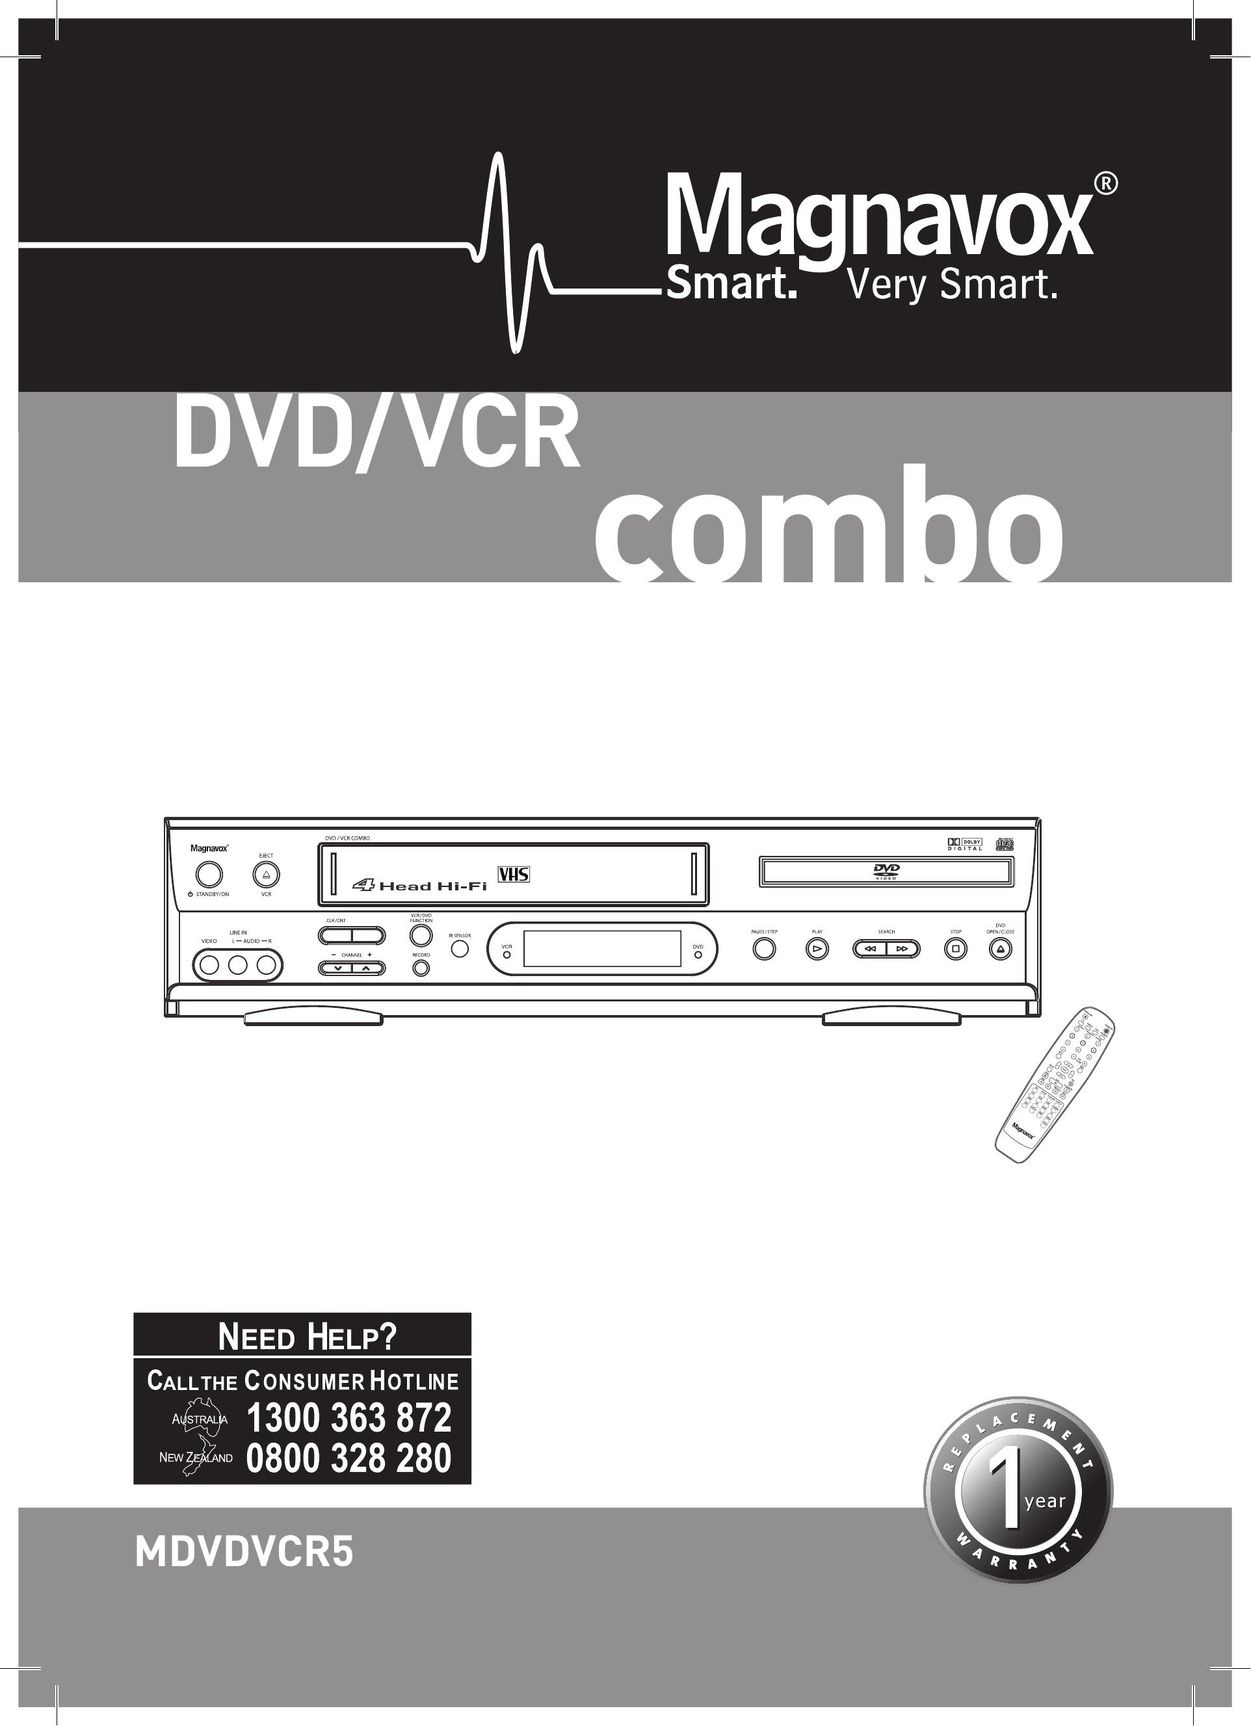 Magnavox MDVDVCR5 DVD VCR Combo User Manual